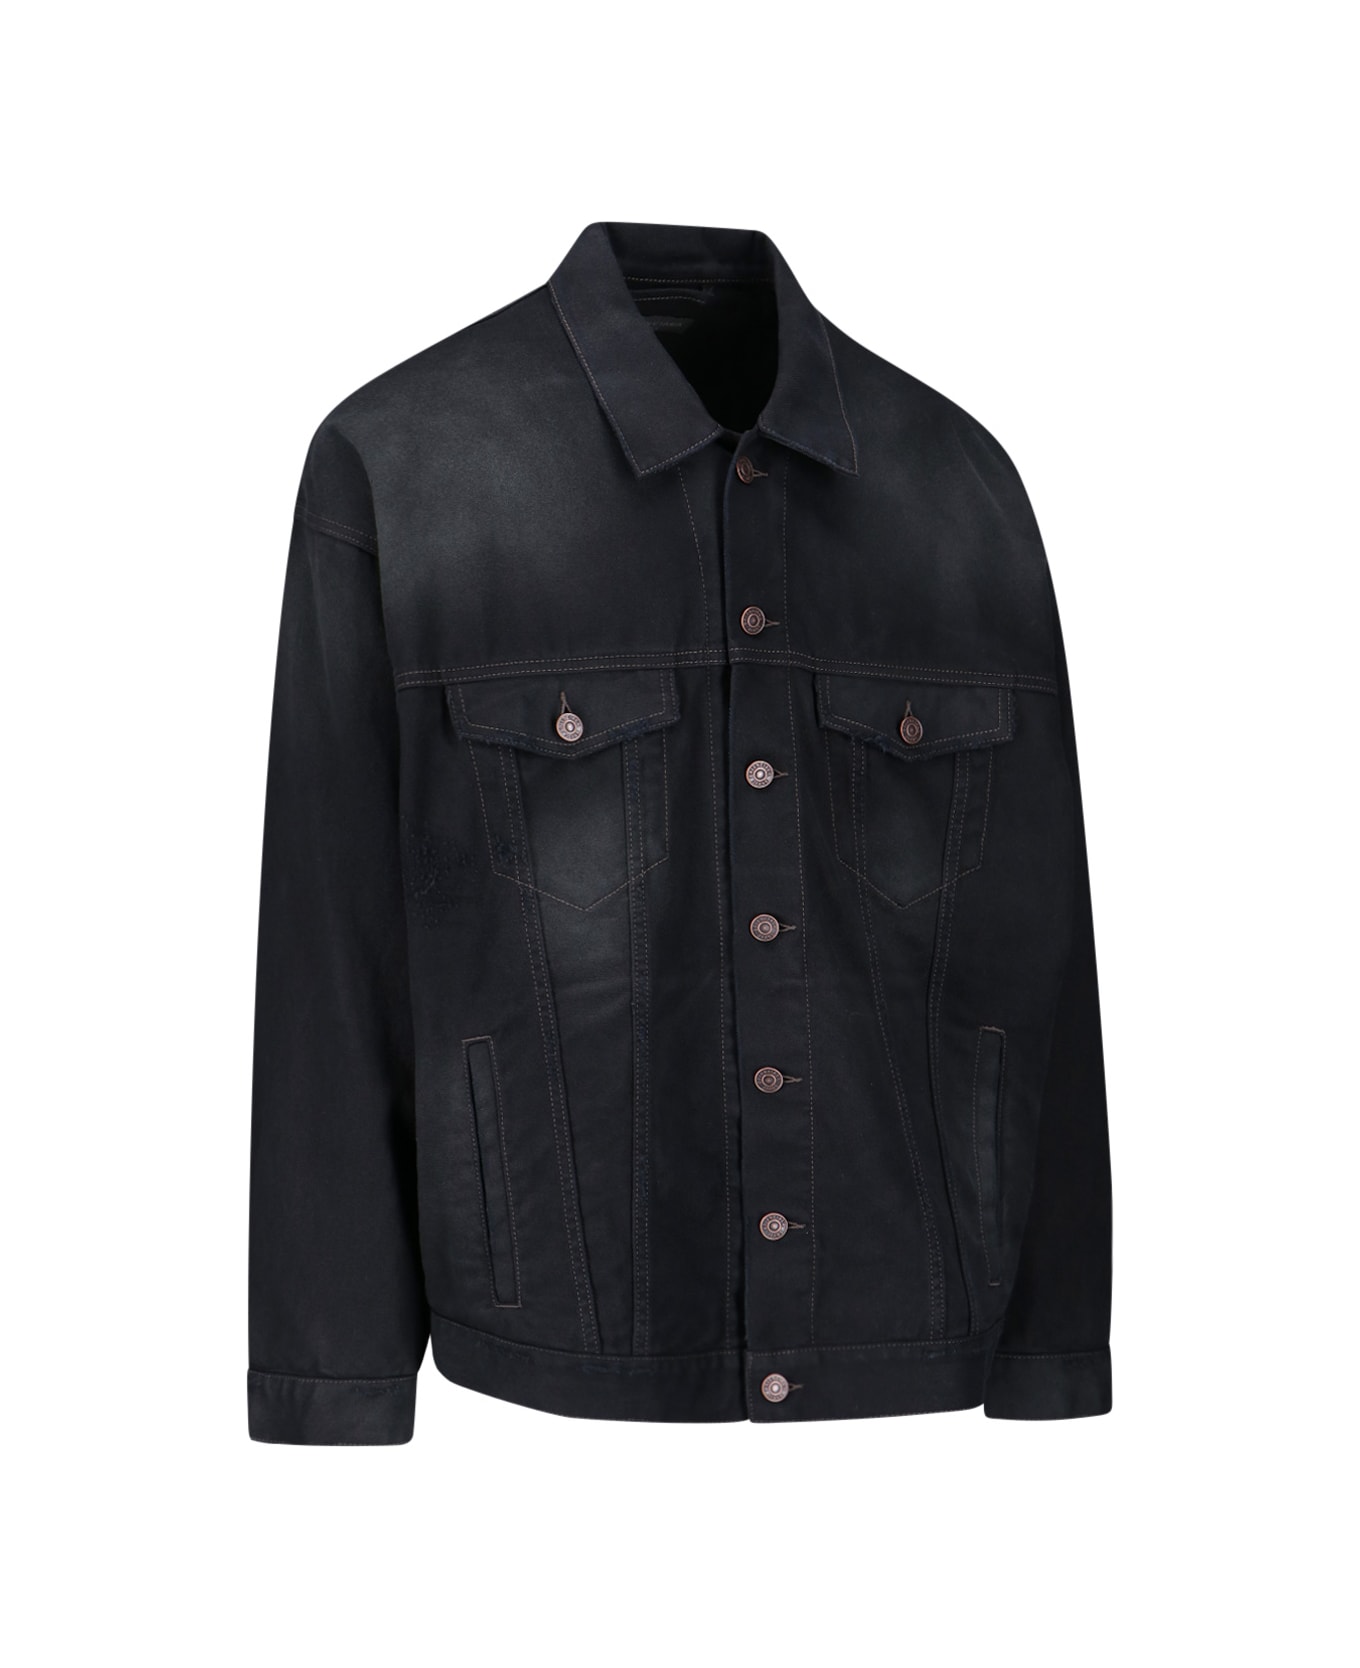 Balenciaga Oversized Black Jacket With Obscured Logo In Cotton Denim Man - Black ジャケット